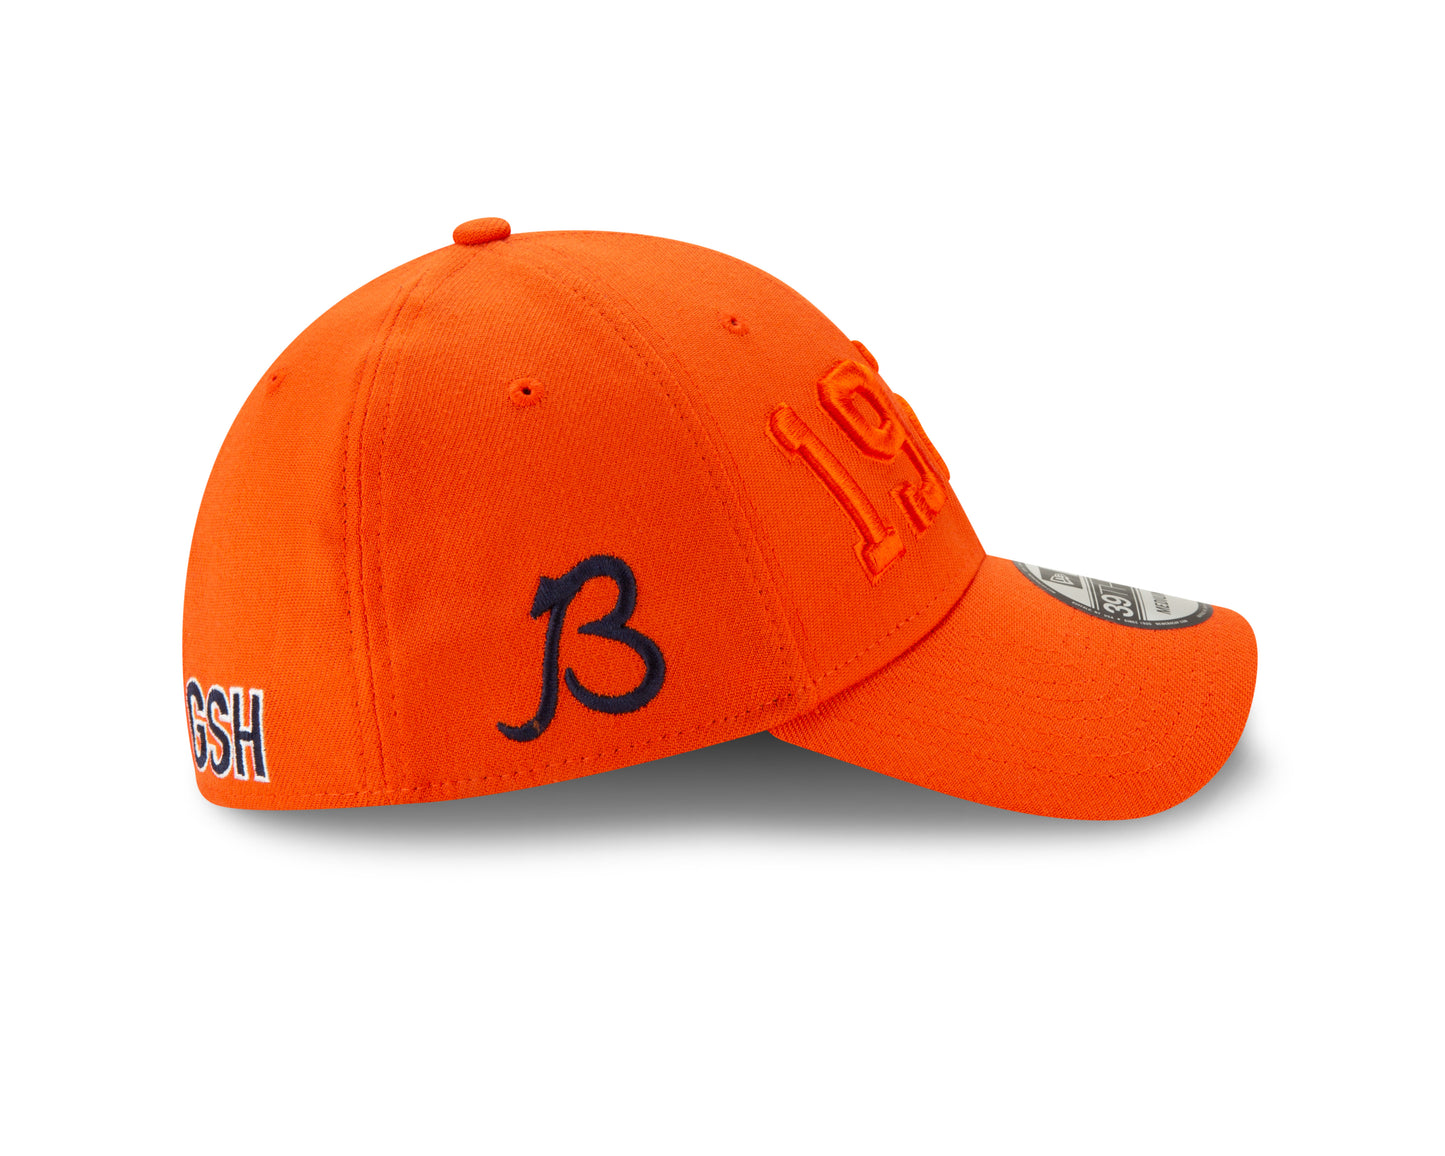 Chicago Bears 2019 Established Collection Sideline Orange Alternate "B" Logo 39THIRTY Flex Hat